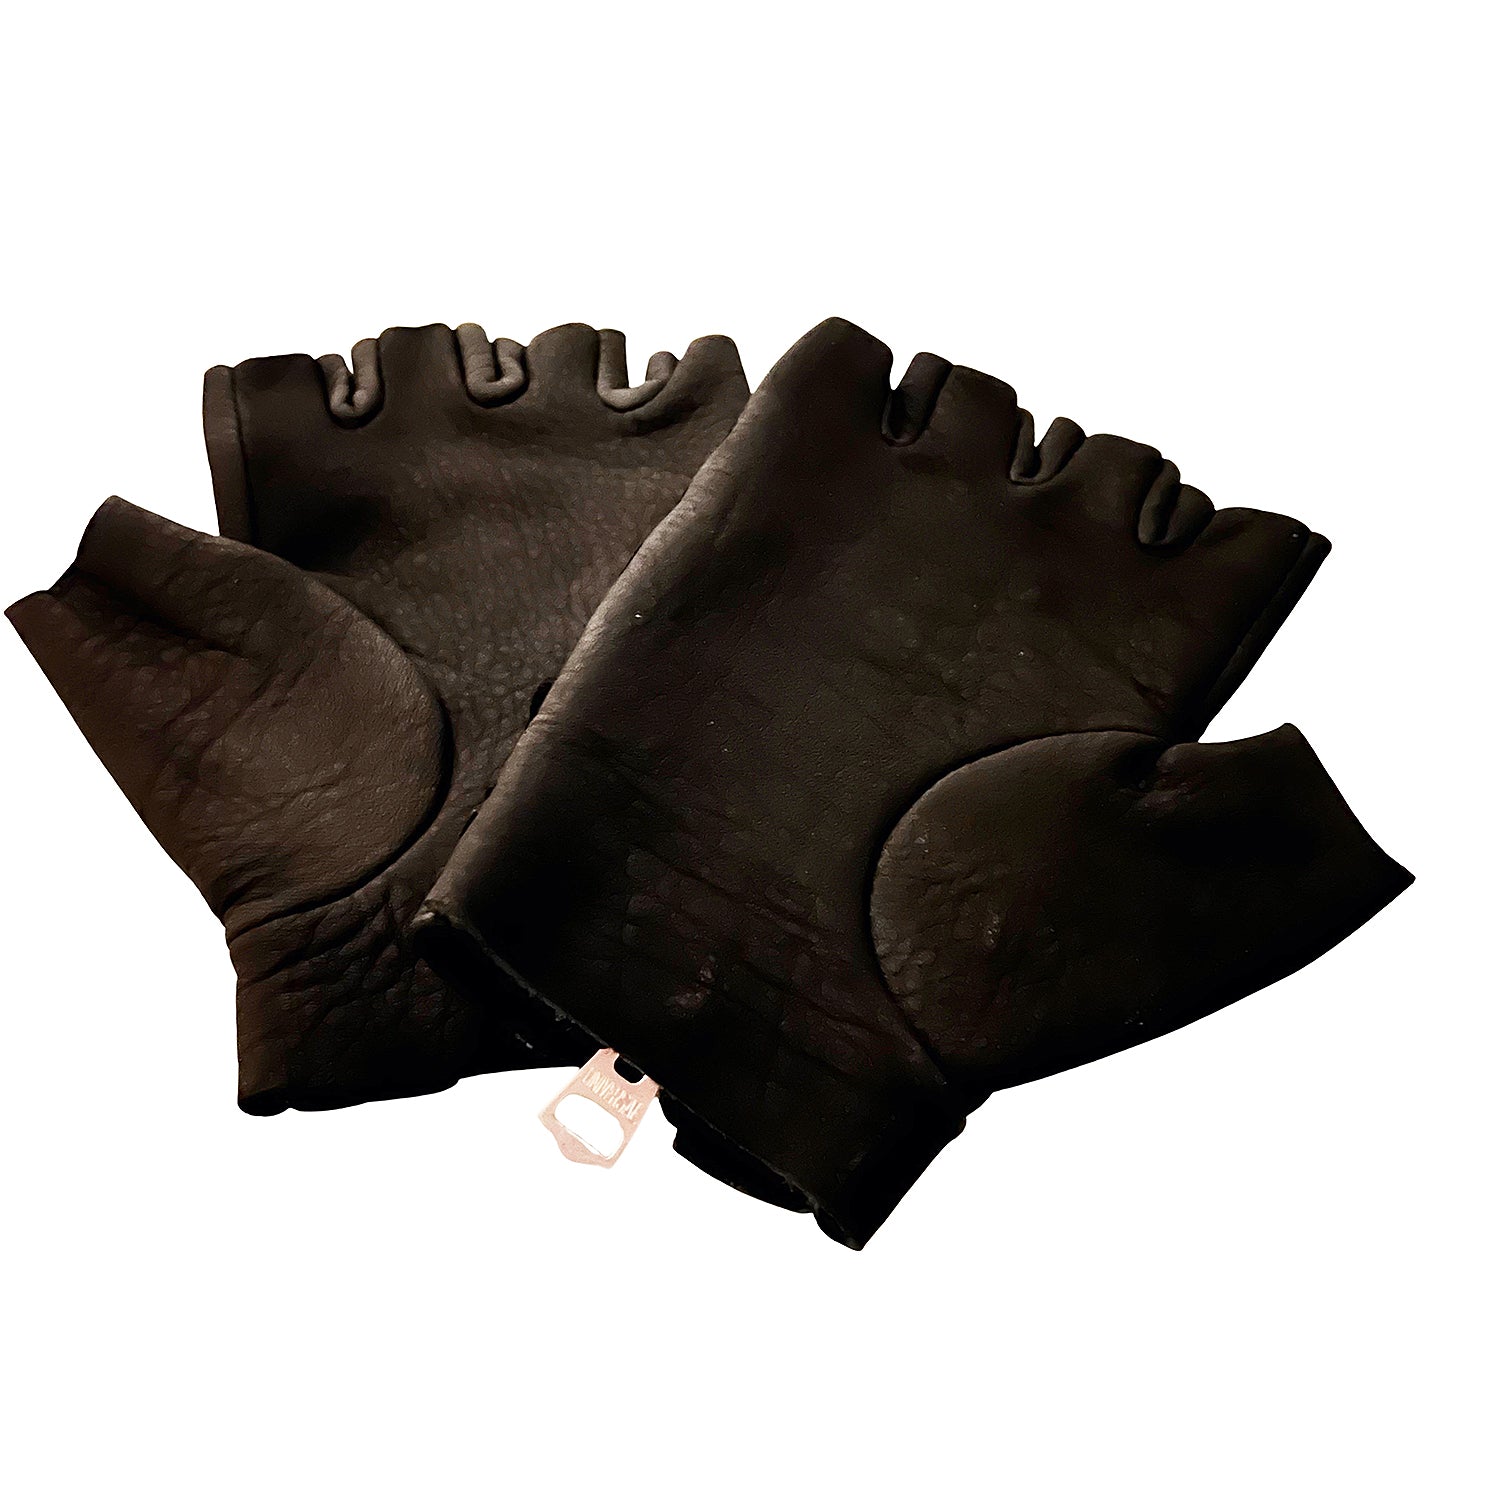 Men's gloves - FINGERLESS - deerskin leather - GOLD-BROWN